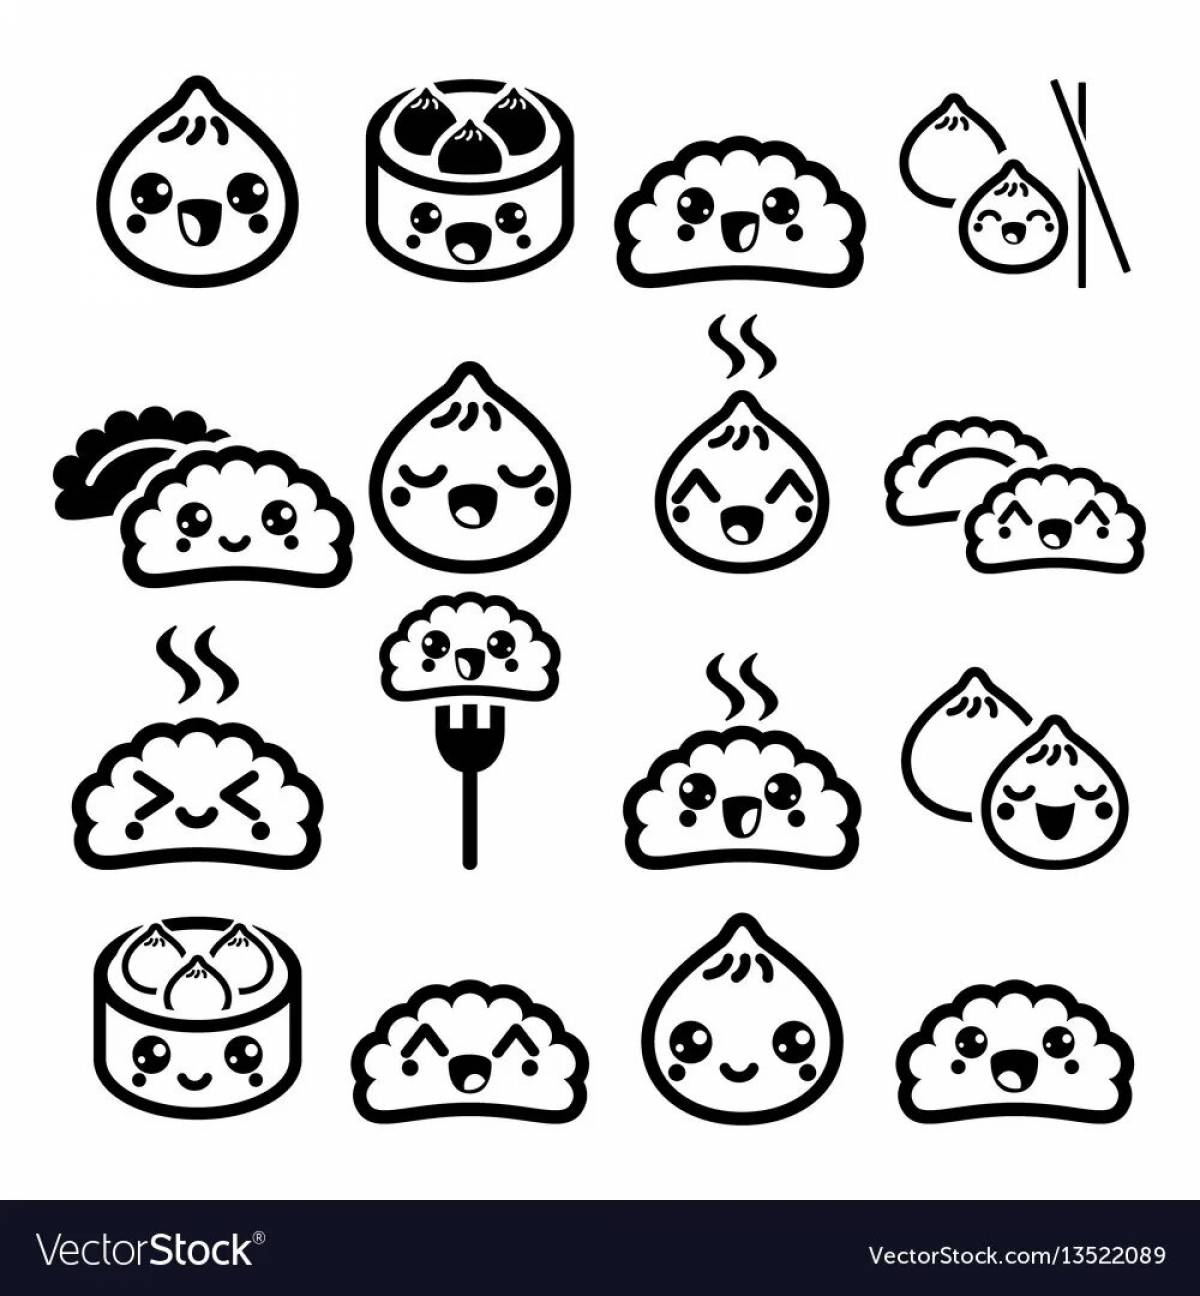 Funny dumpling coloring book for kids